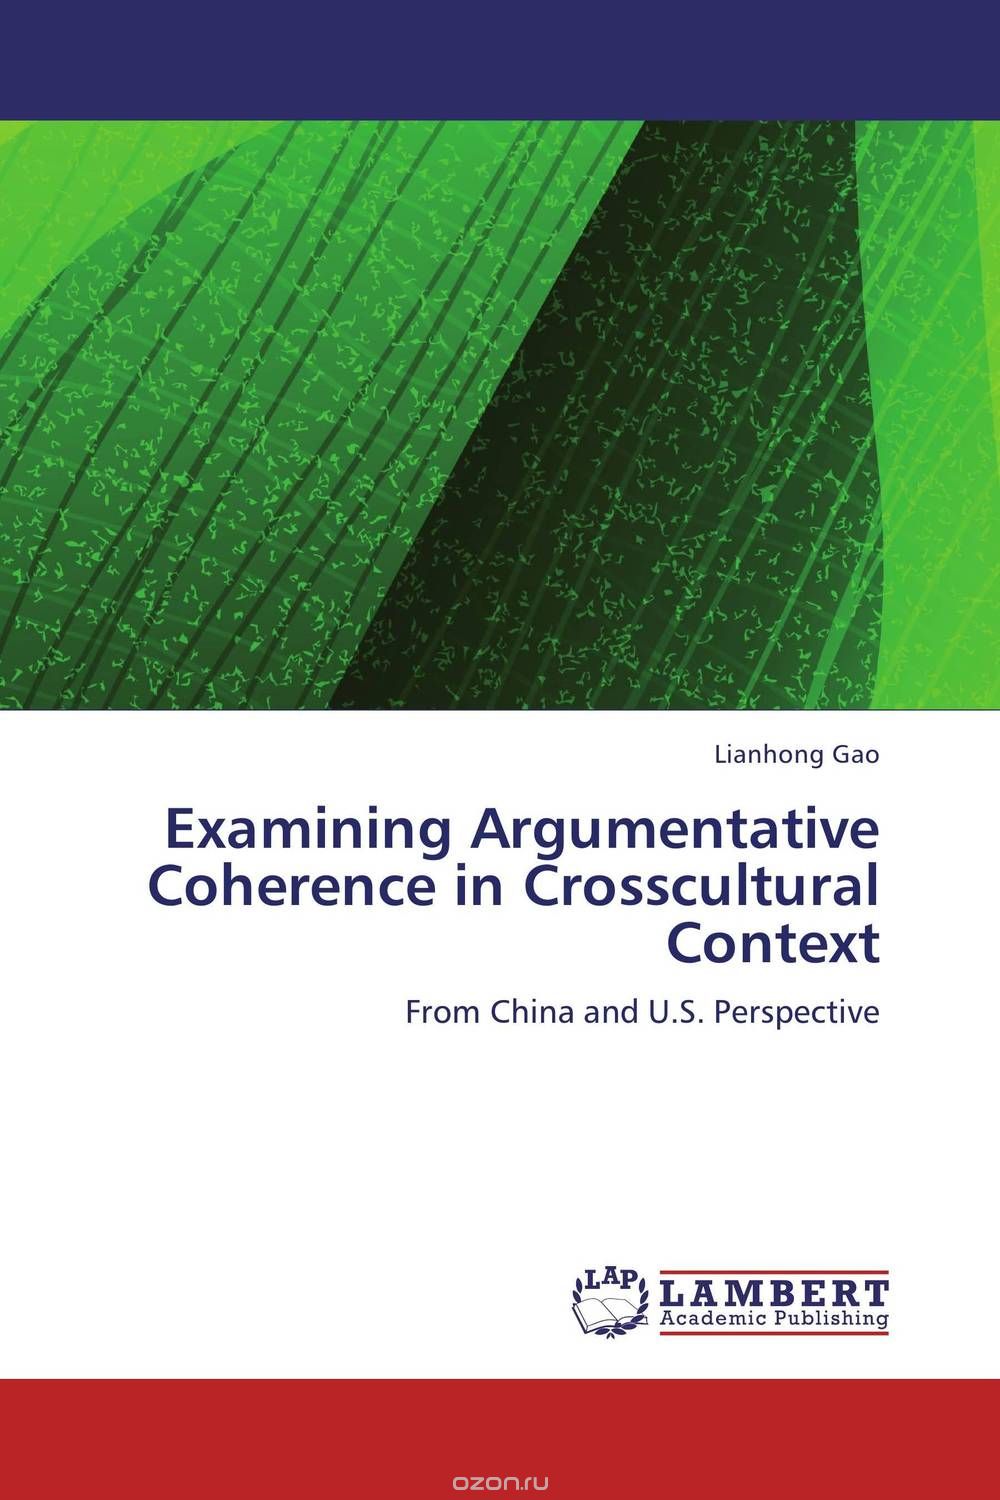 Скачать книгу "Examining Argumentative Coherence in Crosscultural Context"